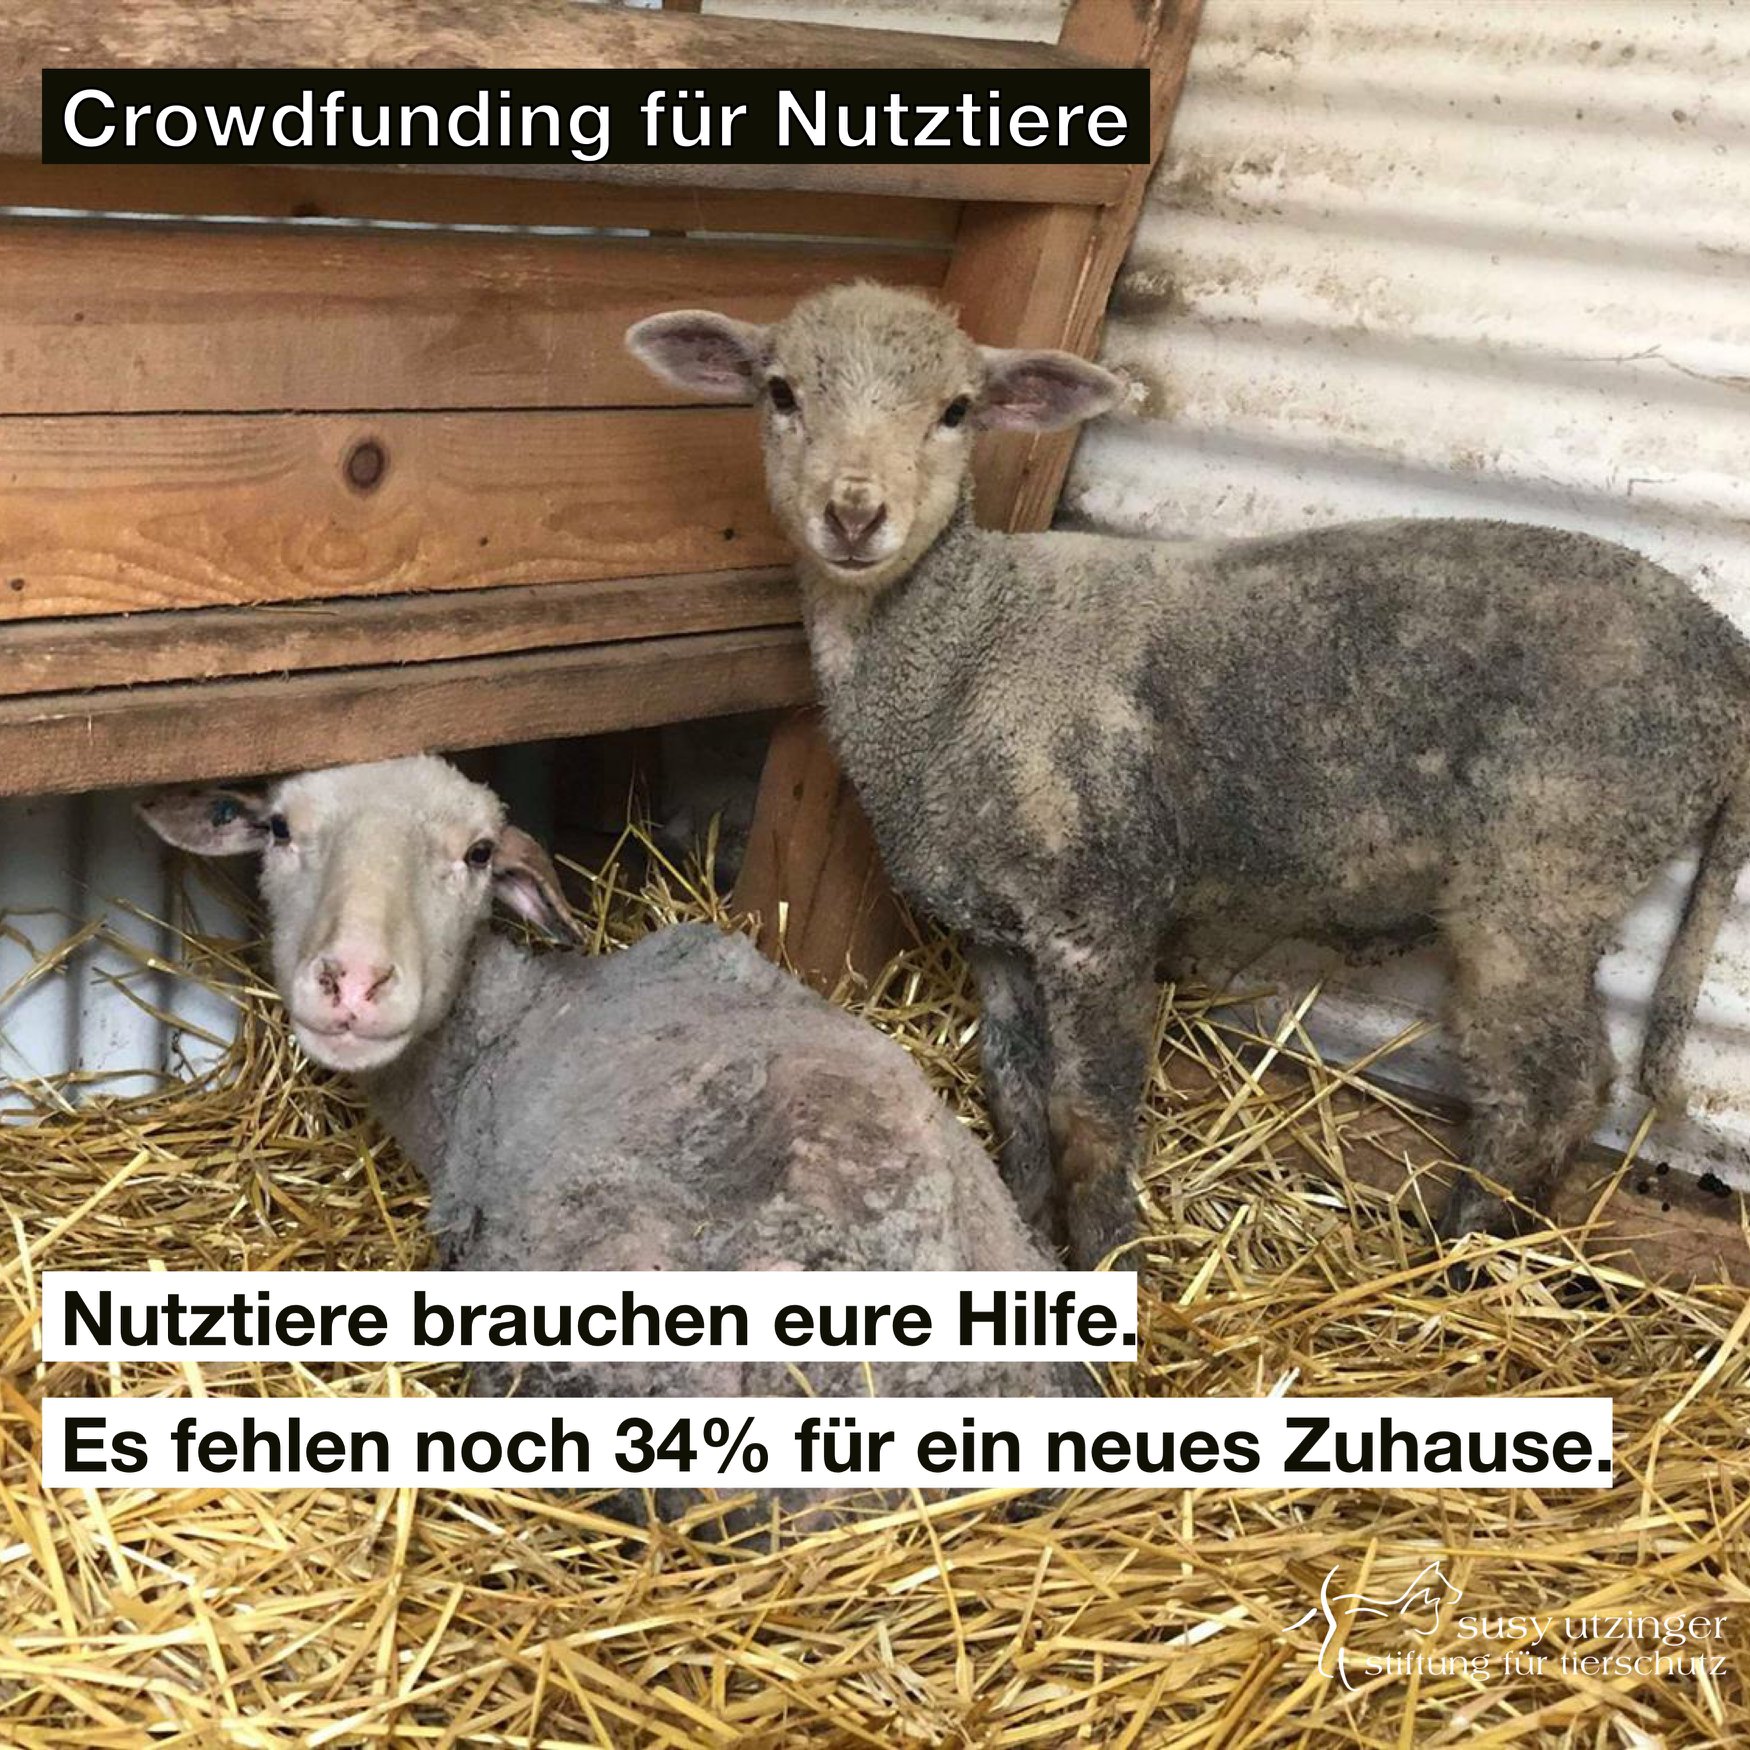 Crowdfunding for farm animals